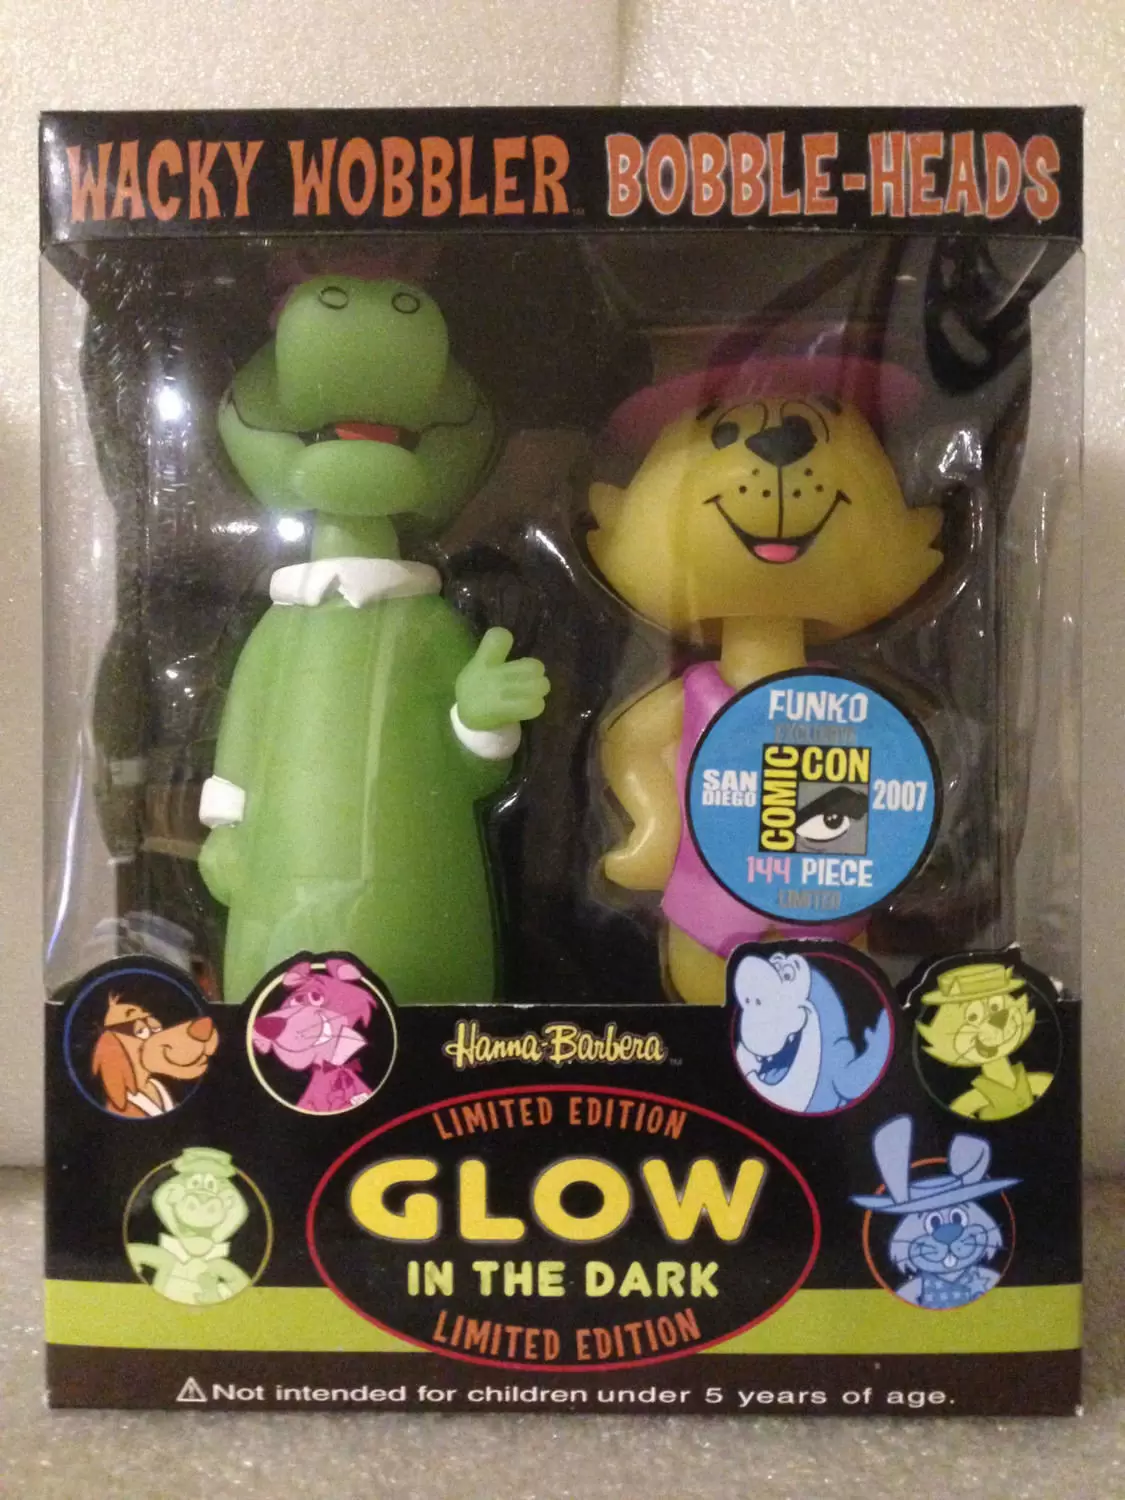 Wacky Wobbler Cartoons - Wally Gator and Top Cat Glow In The Dark 2 Pack